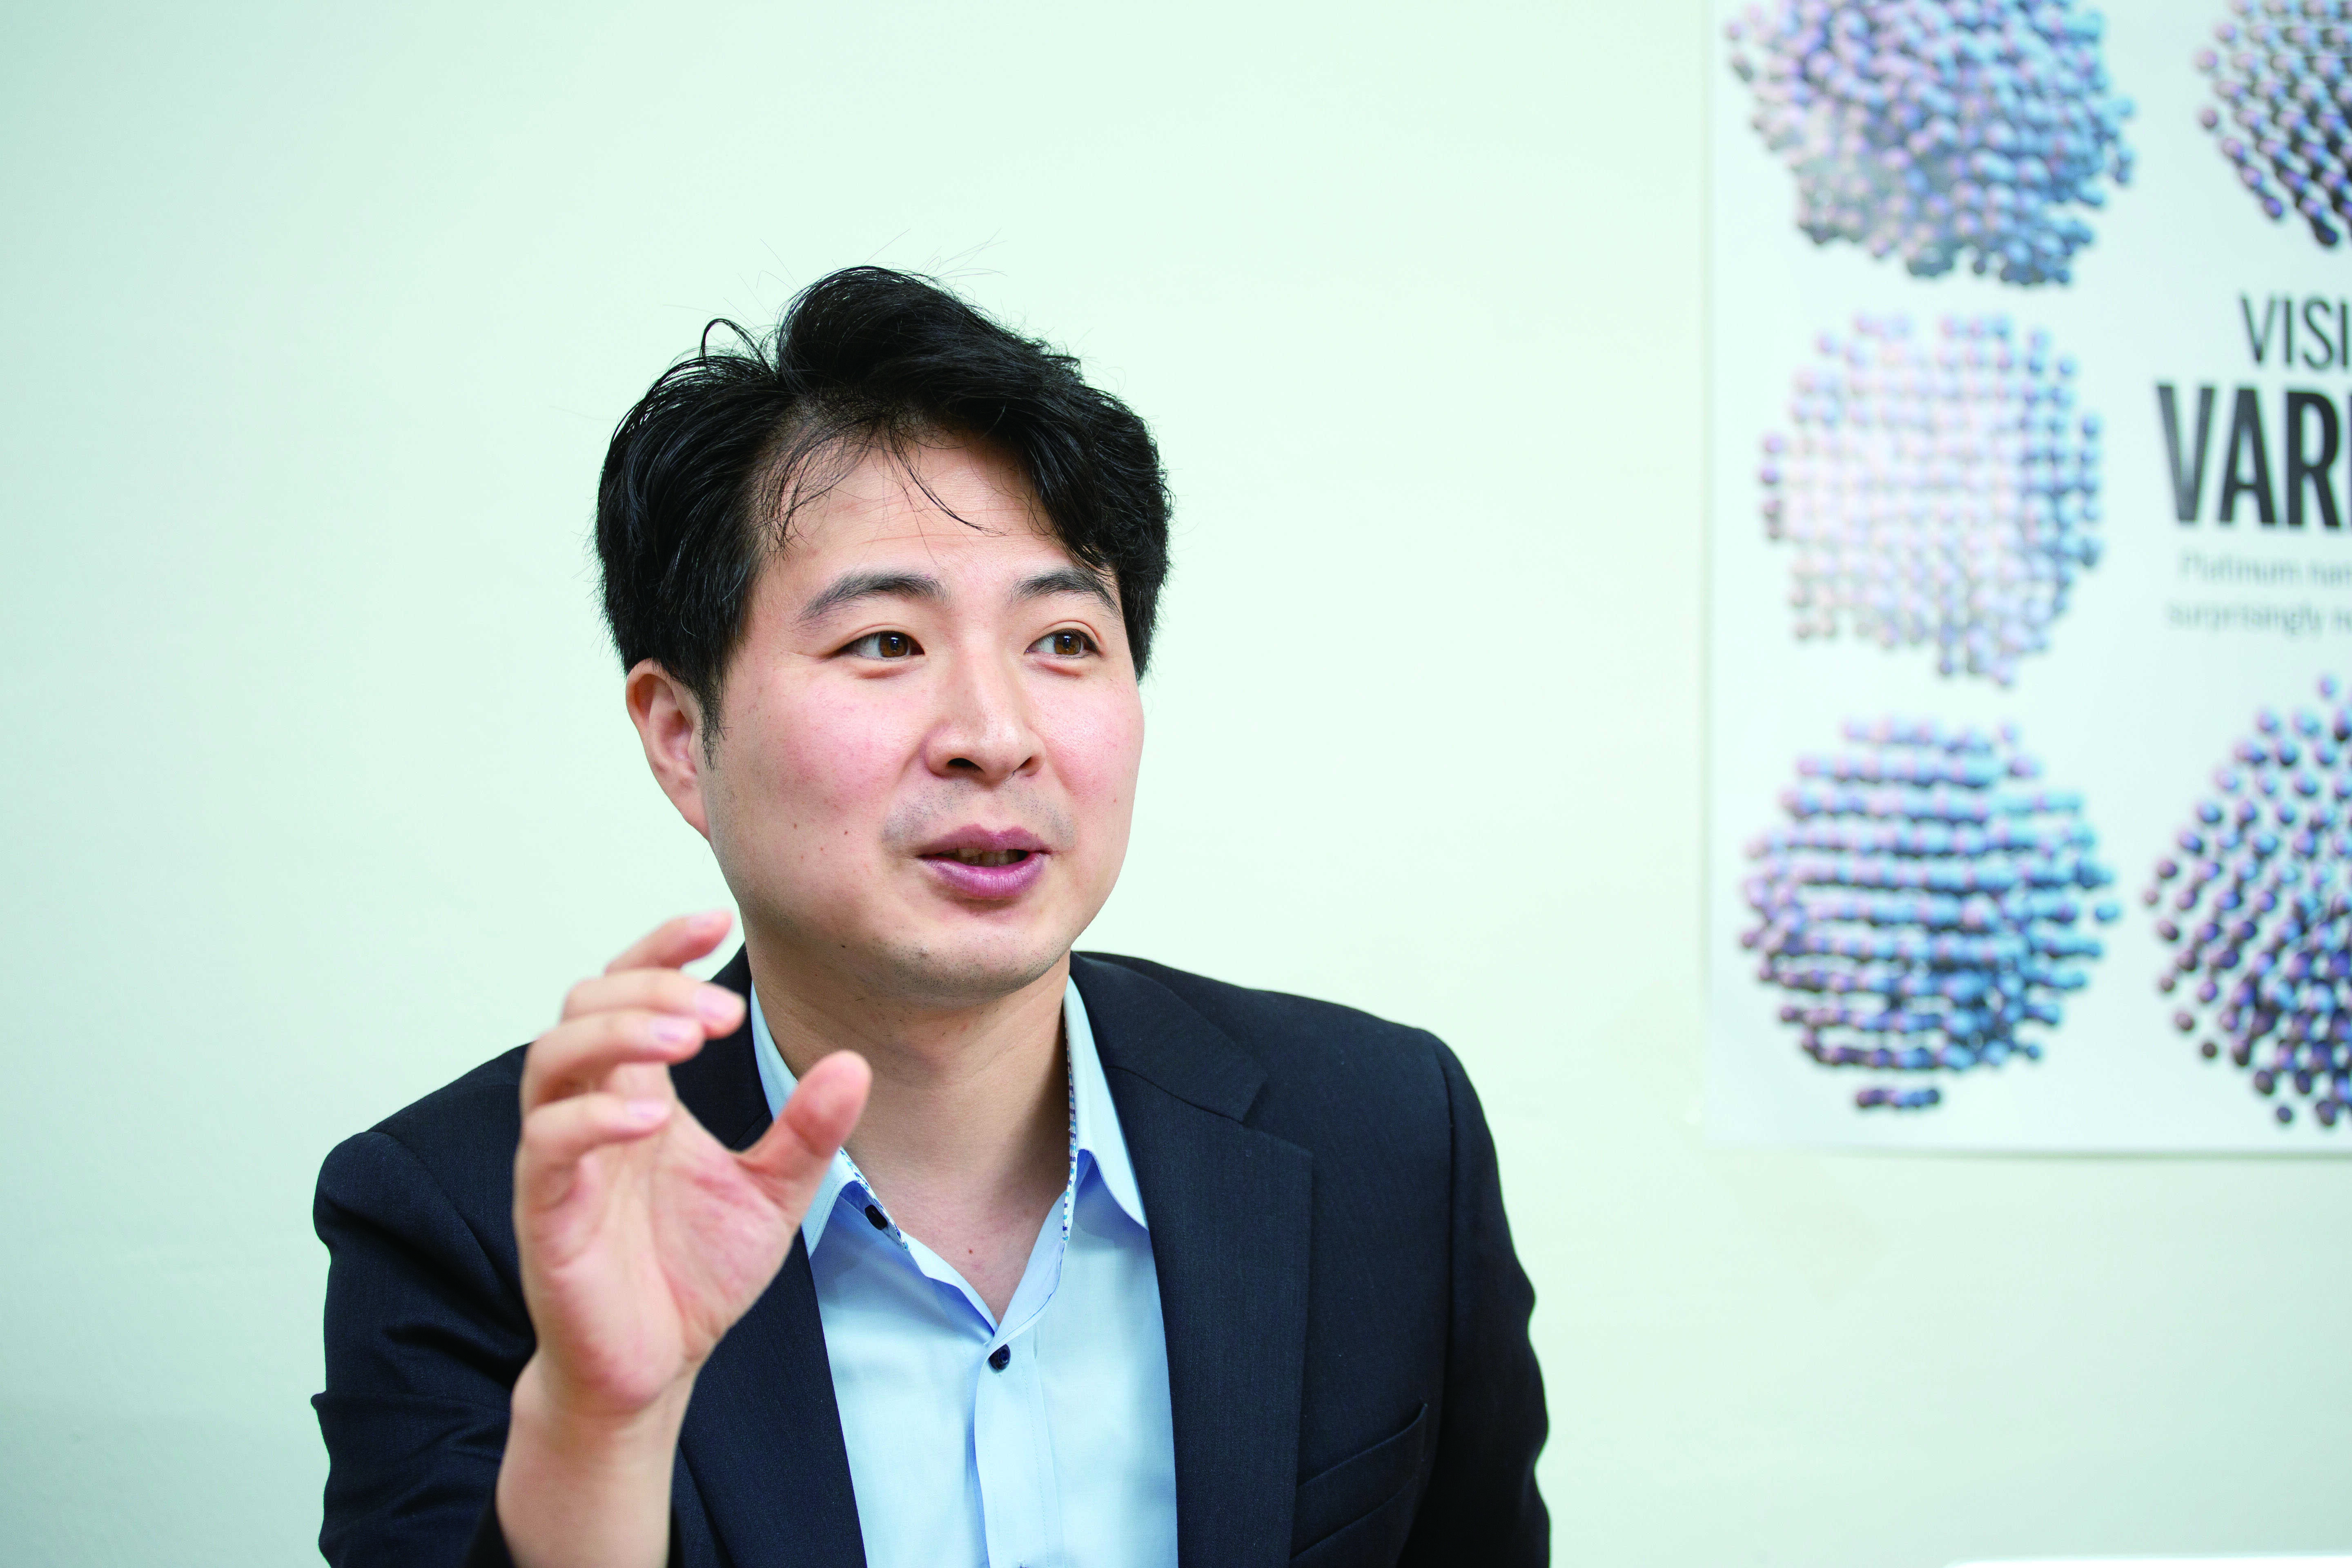 KIM Byung Hyo
            Assistant Professor at Soongsil University Department of Organic Materials and Fiber Engineering
            